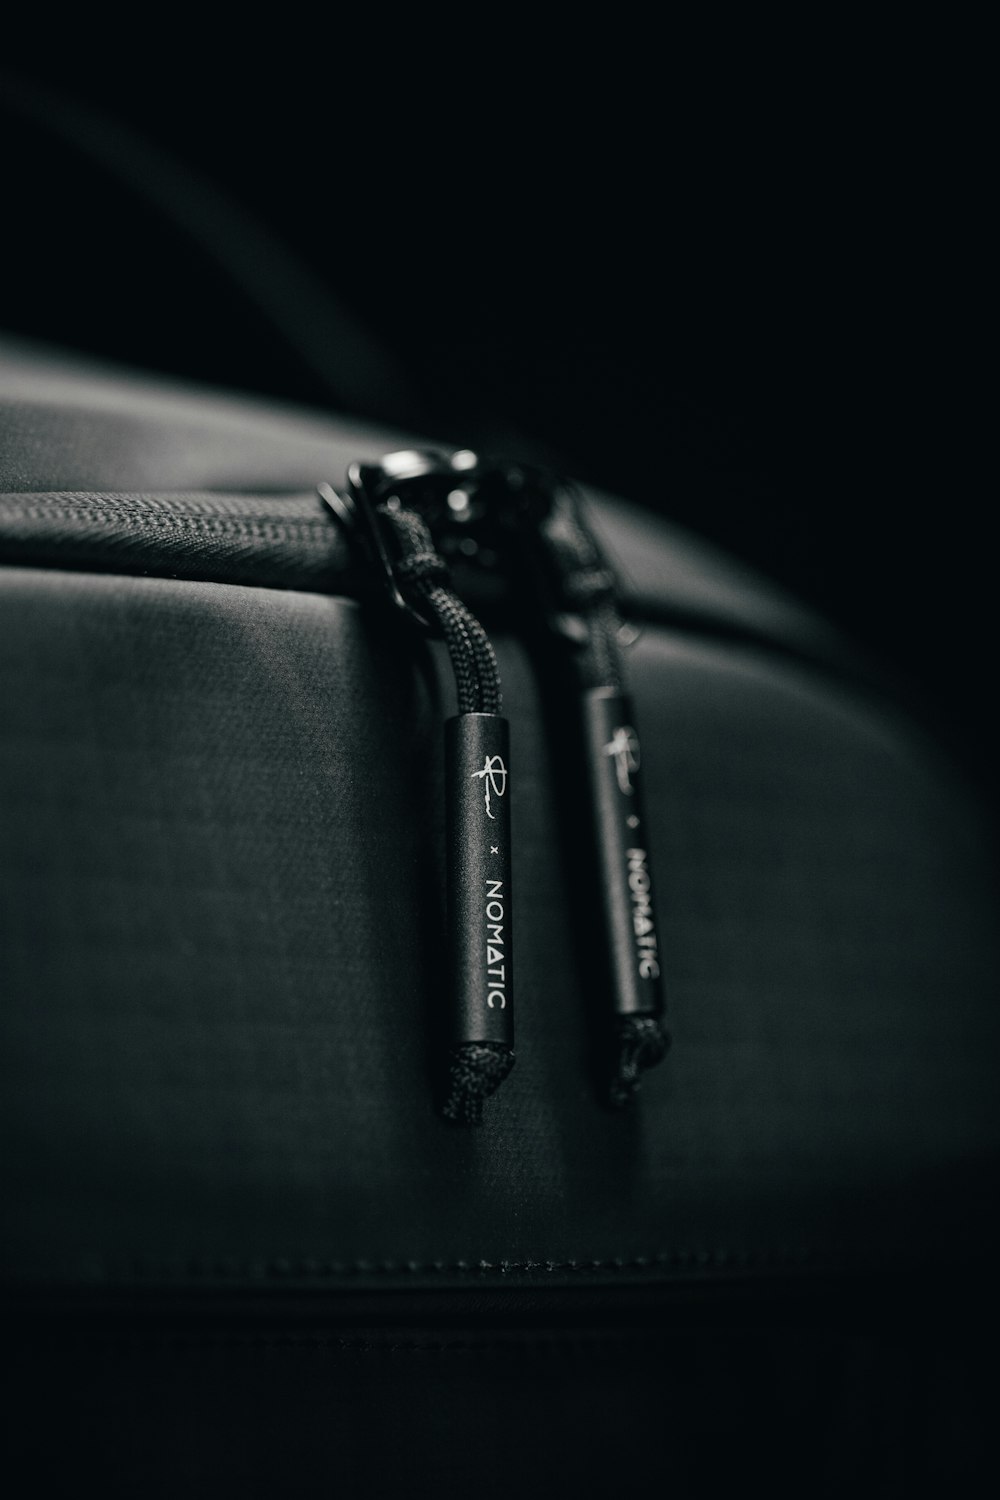 bolsa de couro preta na fotografia em tons de cinza